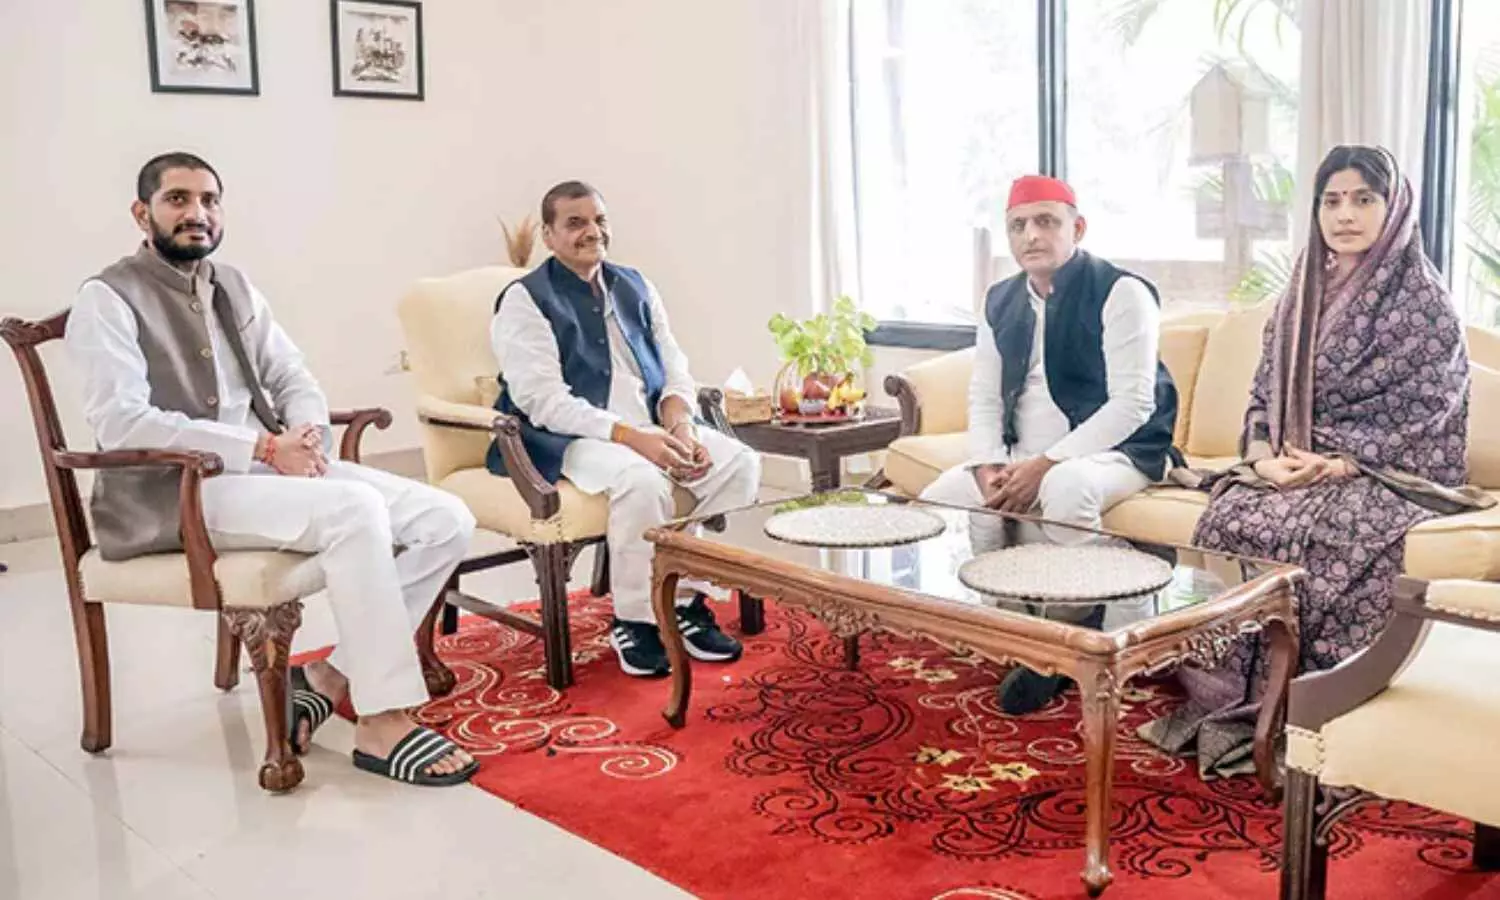 Mainpuri by election Akhilesh Yadav and Shivpal Singh Yadav will have an important meeting